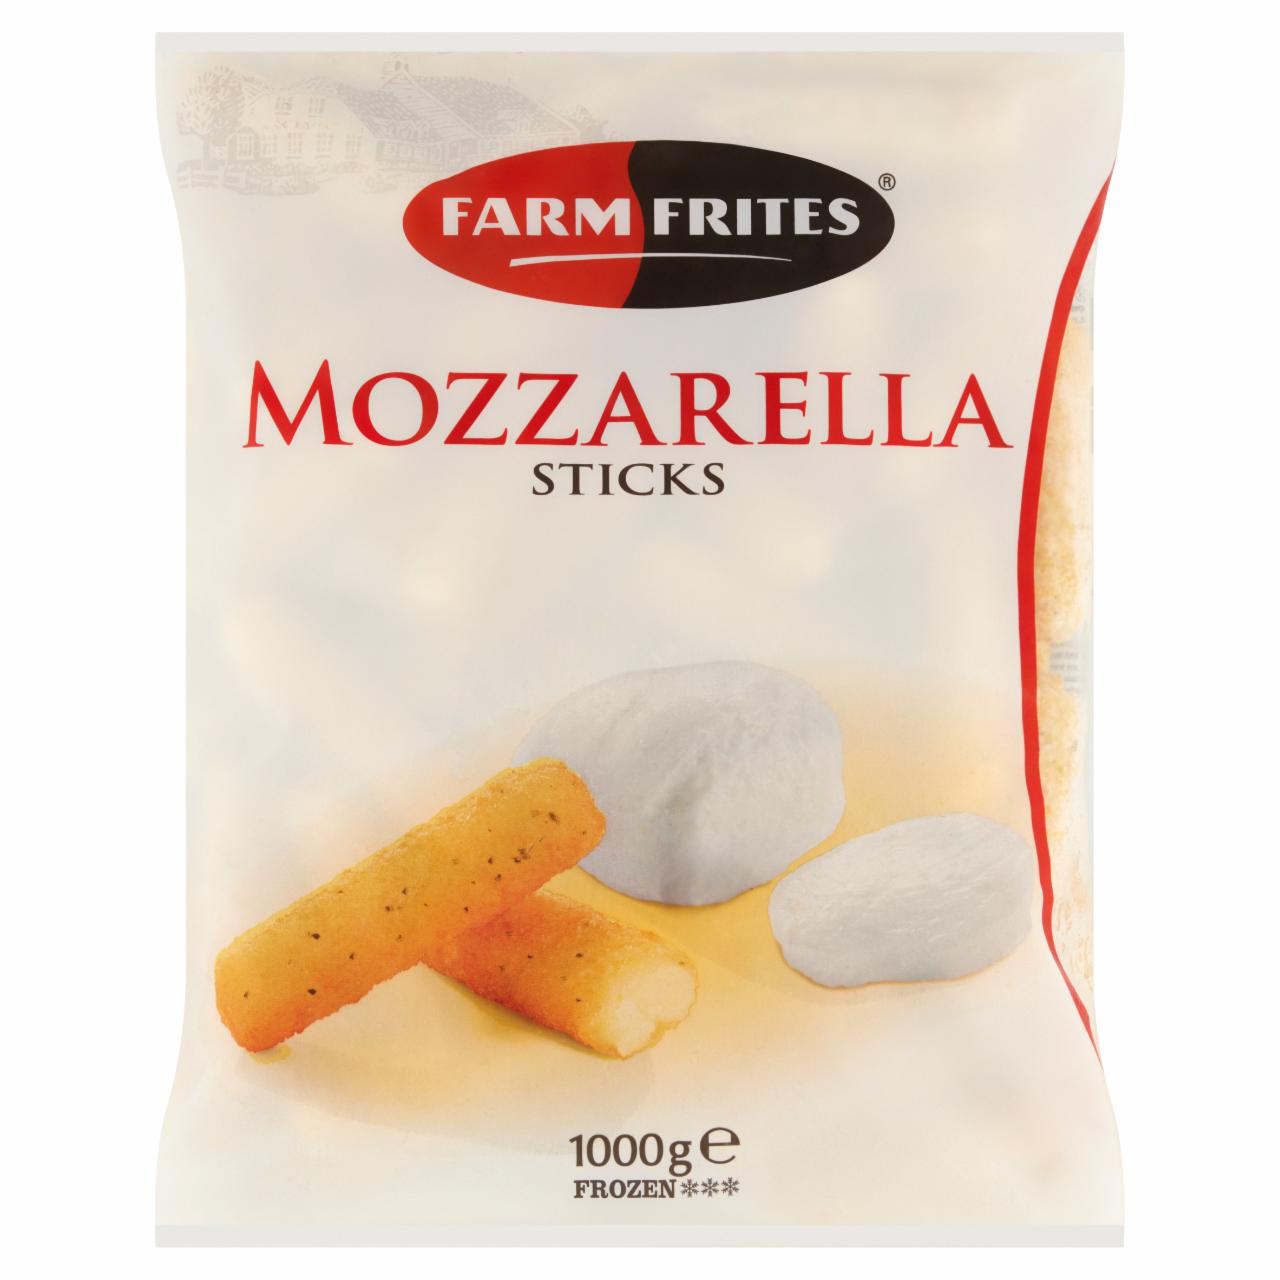 Fotografie - Mozzarella Sticks Farm Frites